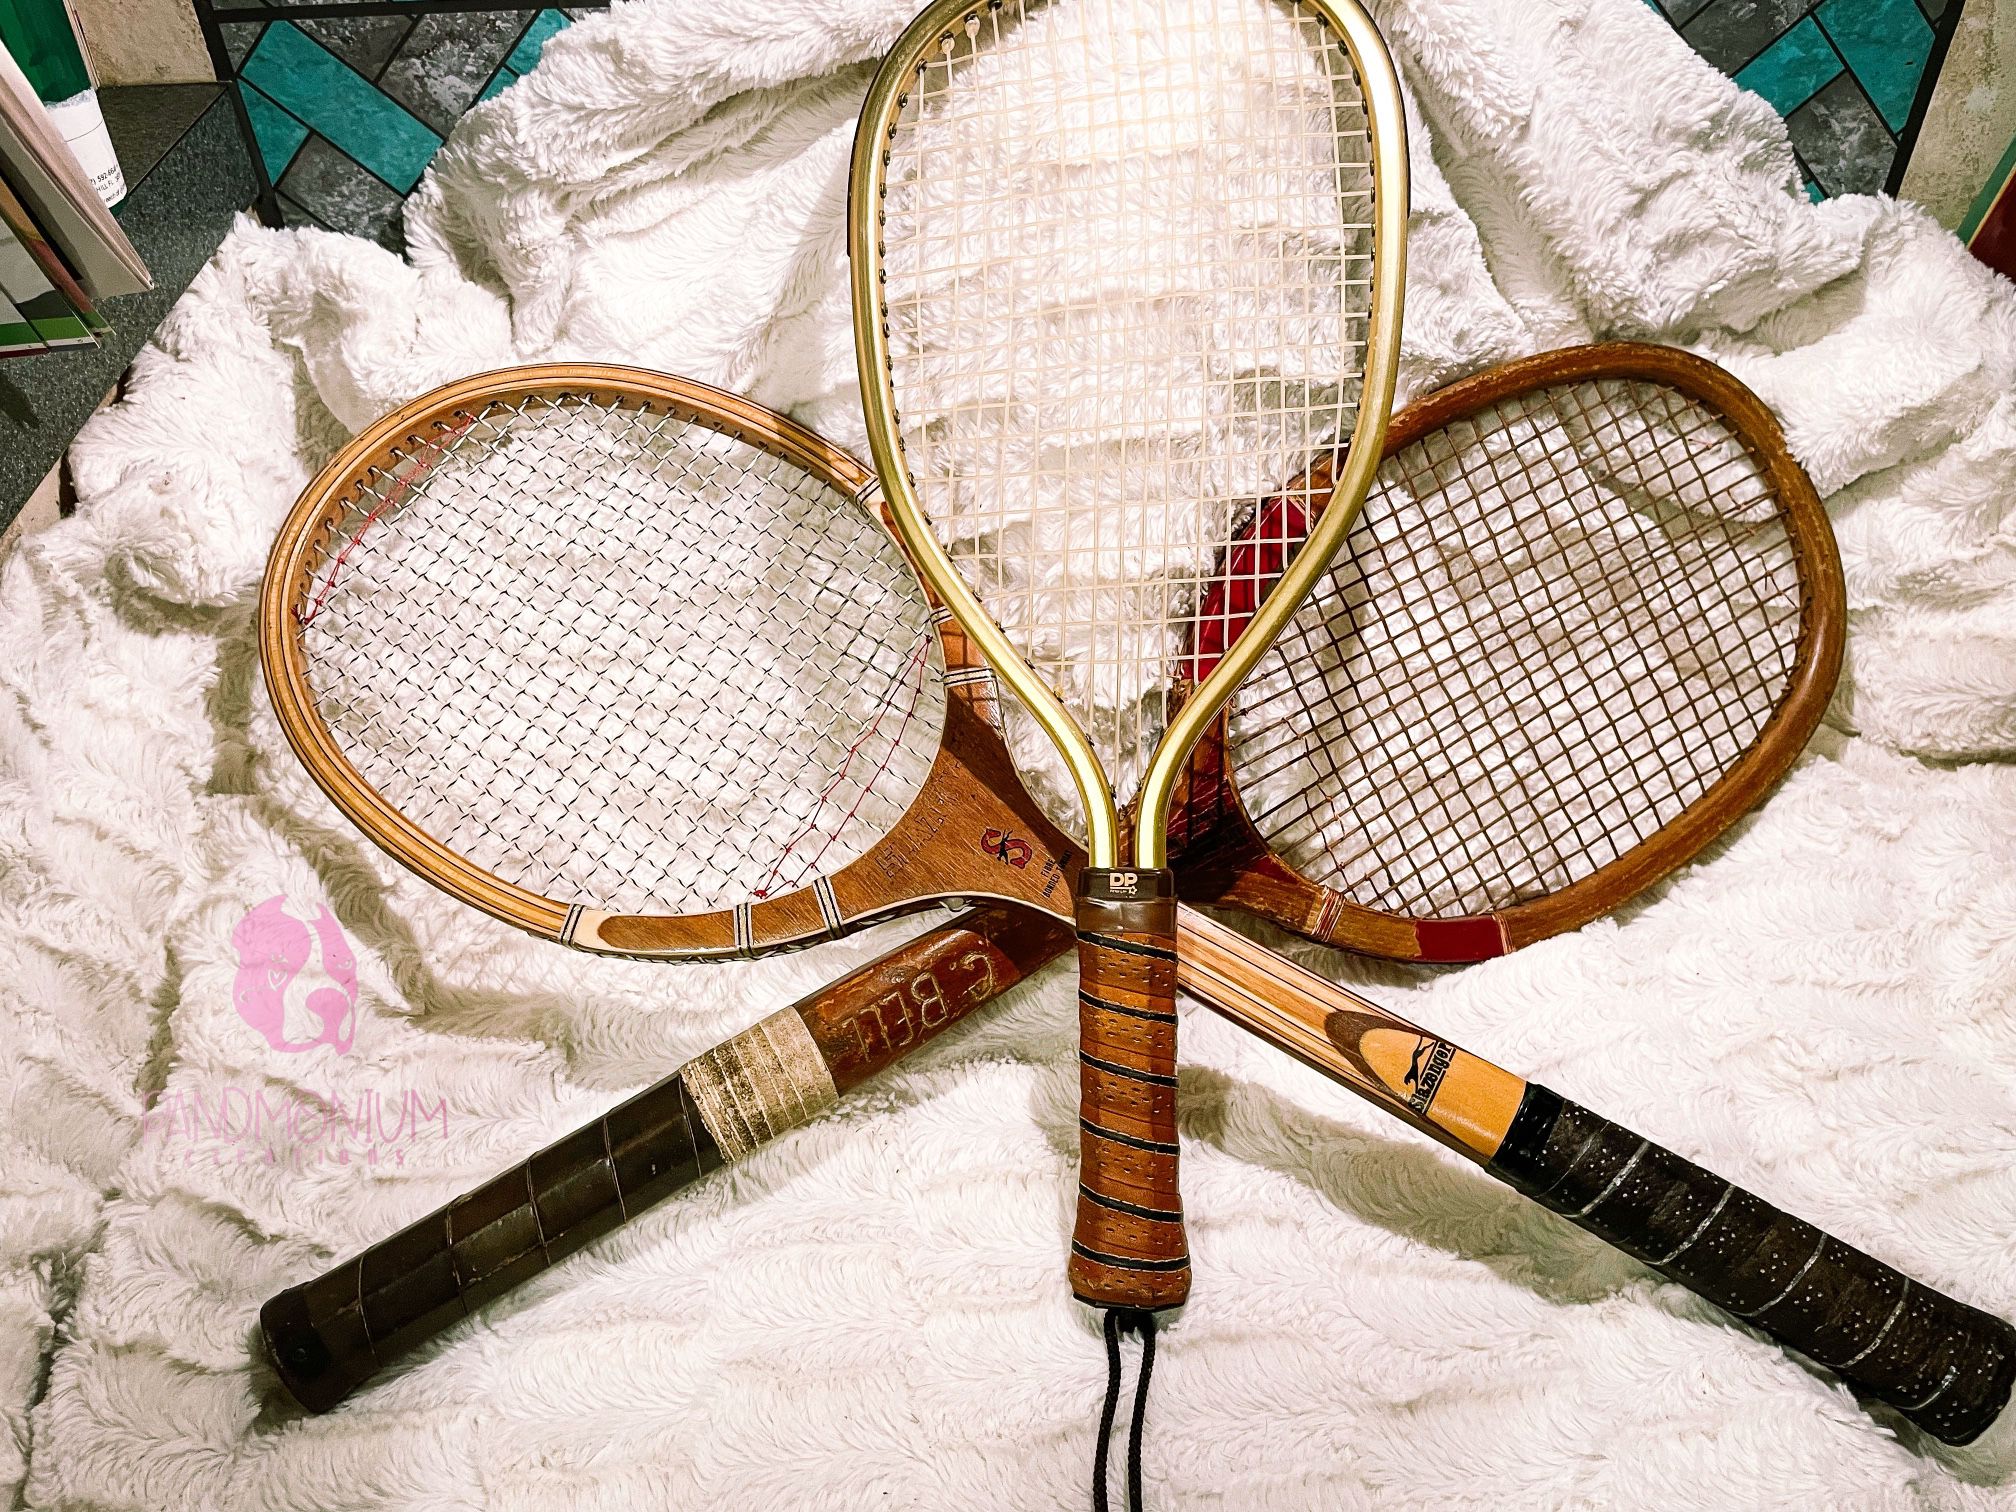 Vintage Lot of Tennis Rackets - Slazenger, Wright & Ditson, DP